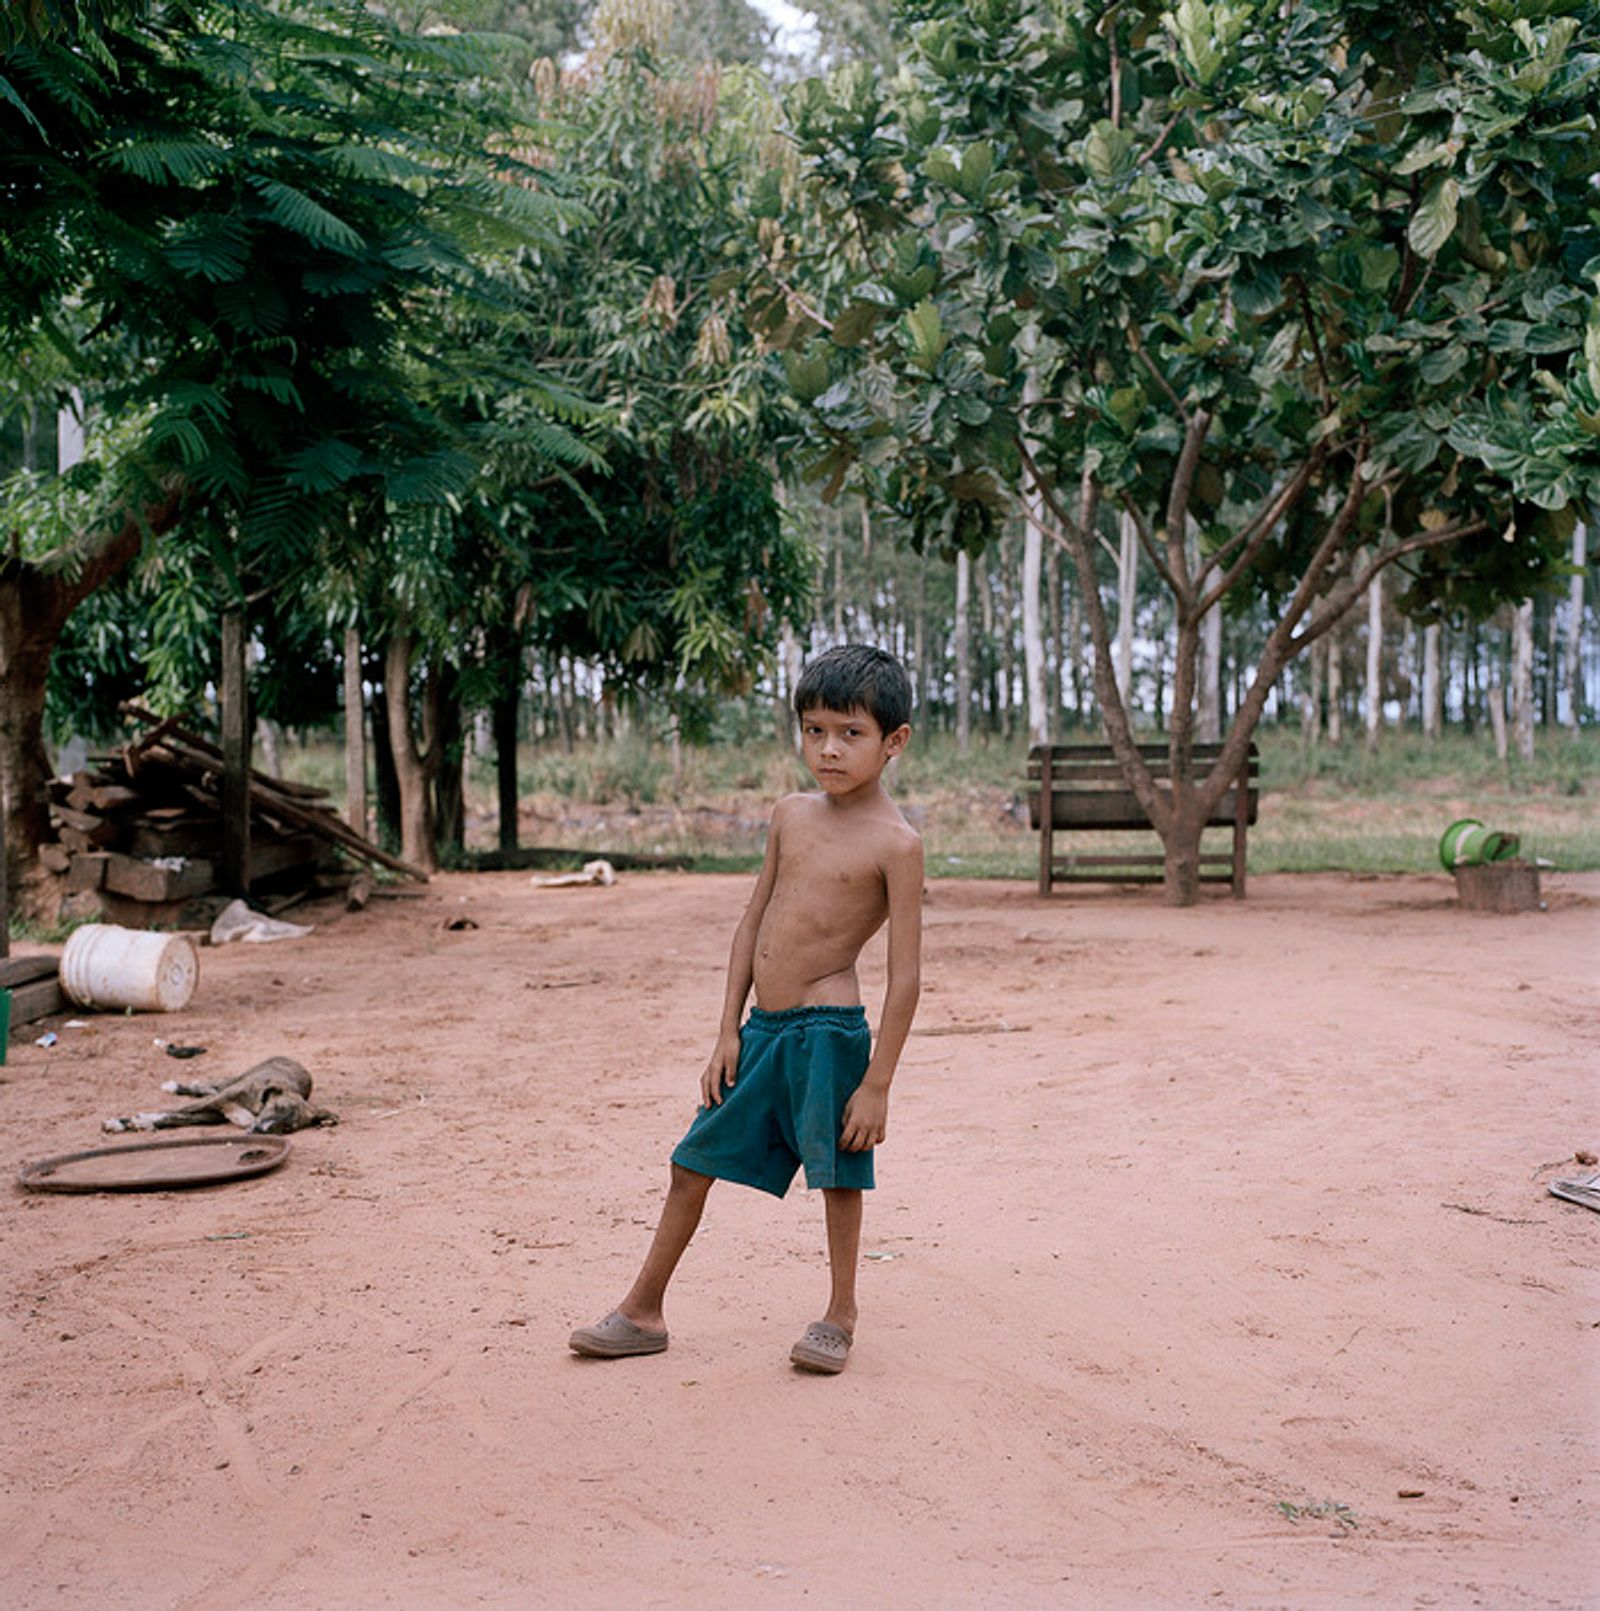 © Jordi Ruiz Cirera - Image from the Paraguay's Land Struggle photography project